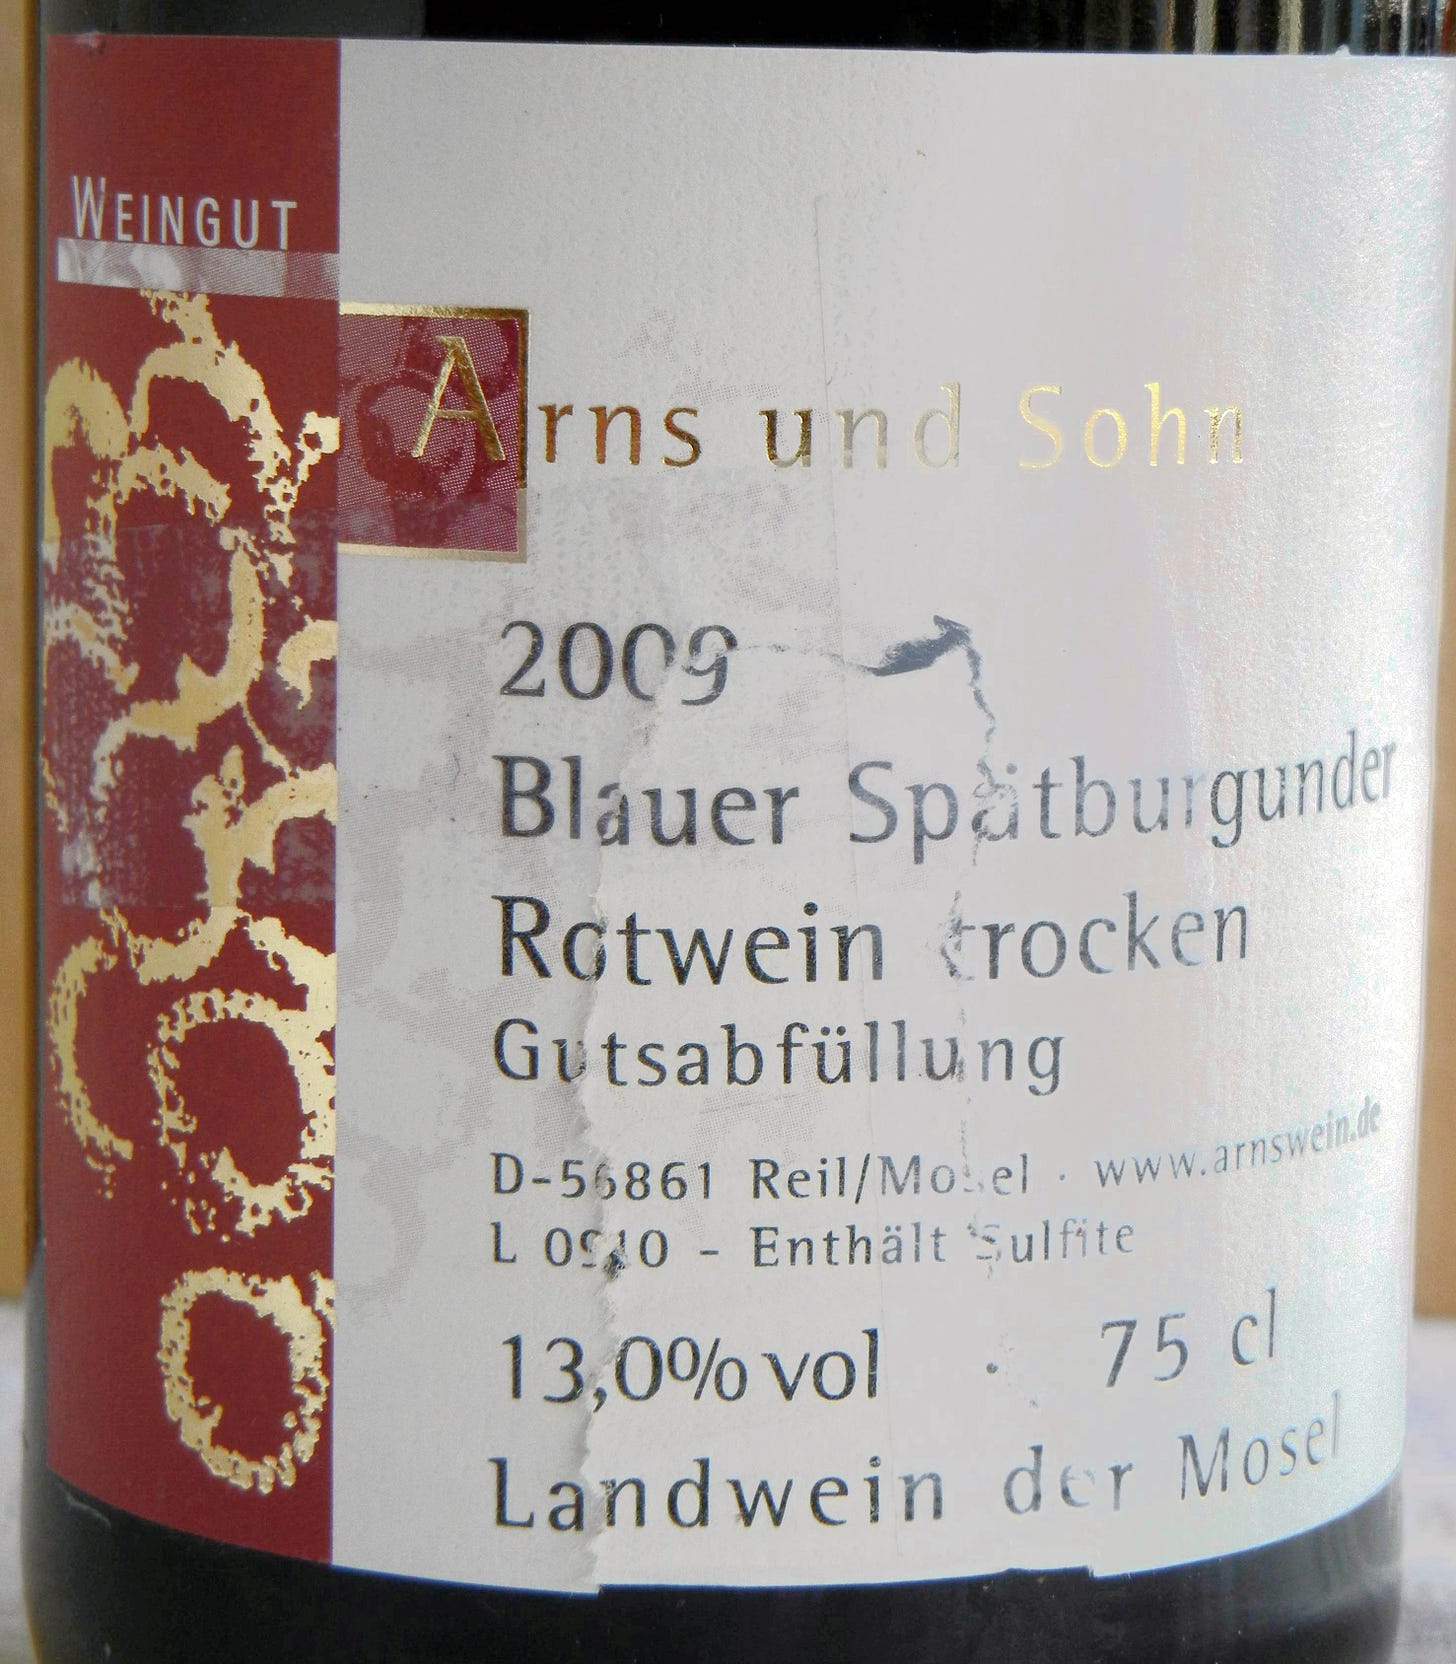 Arns und Sohn Spatburgunder 2009 Label - BC Pinot Noir Tasting Review 15